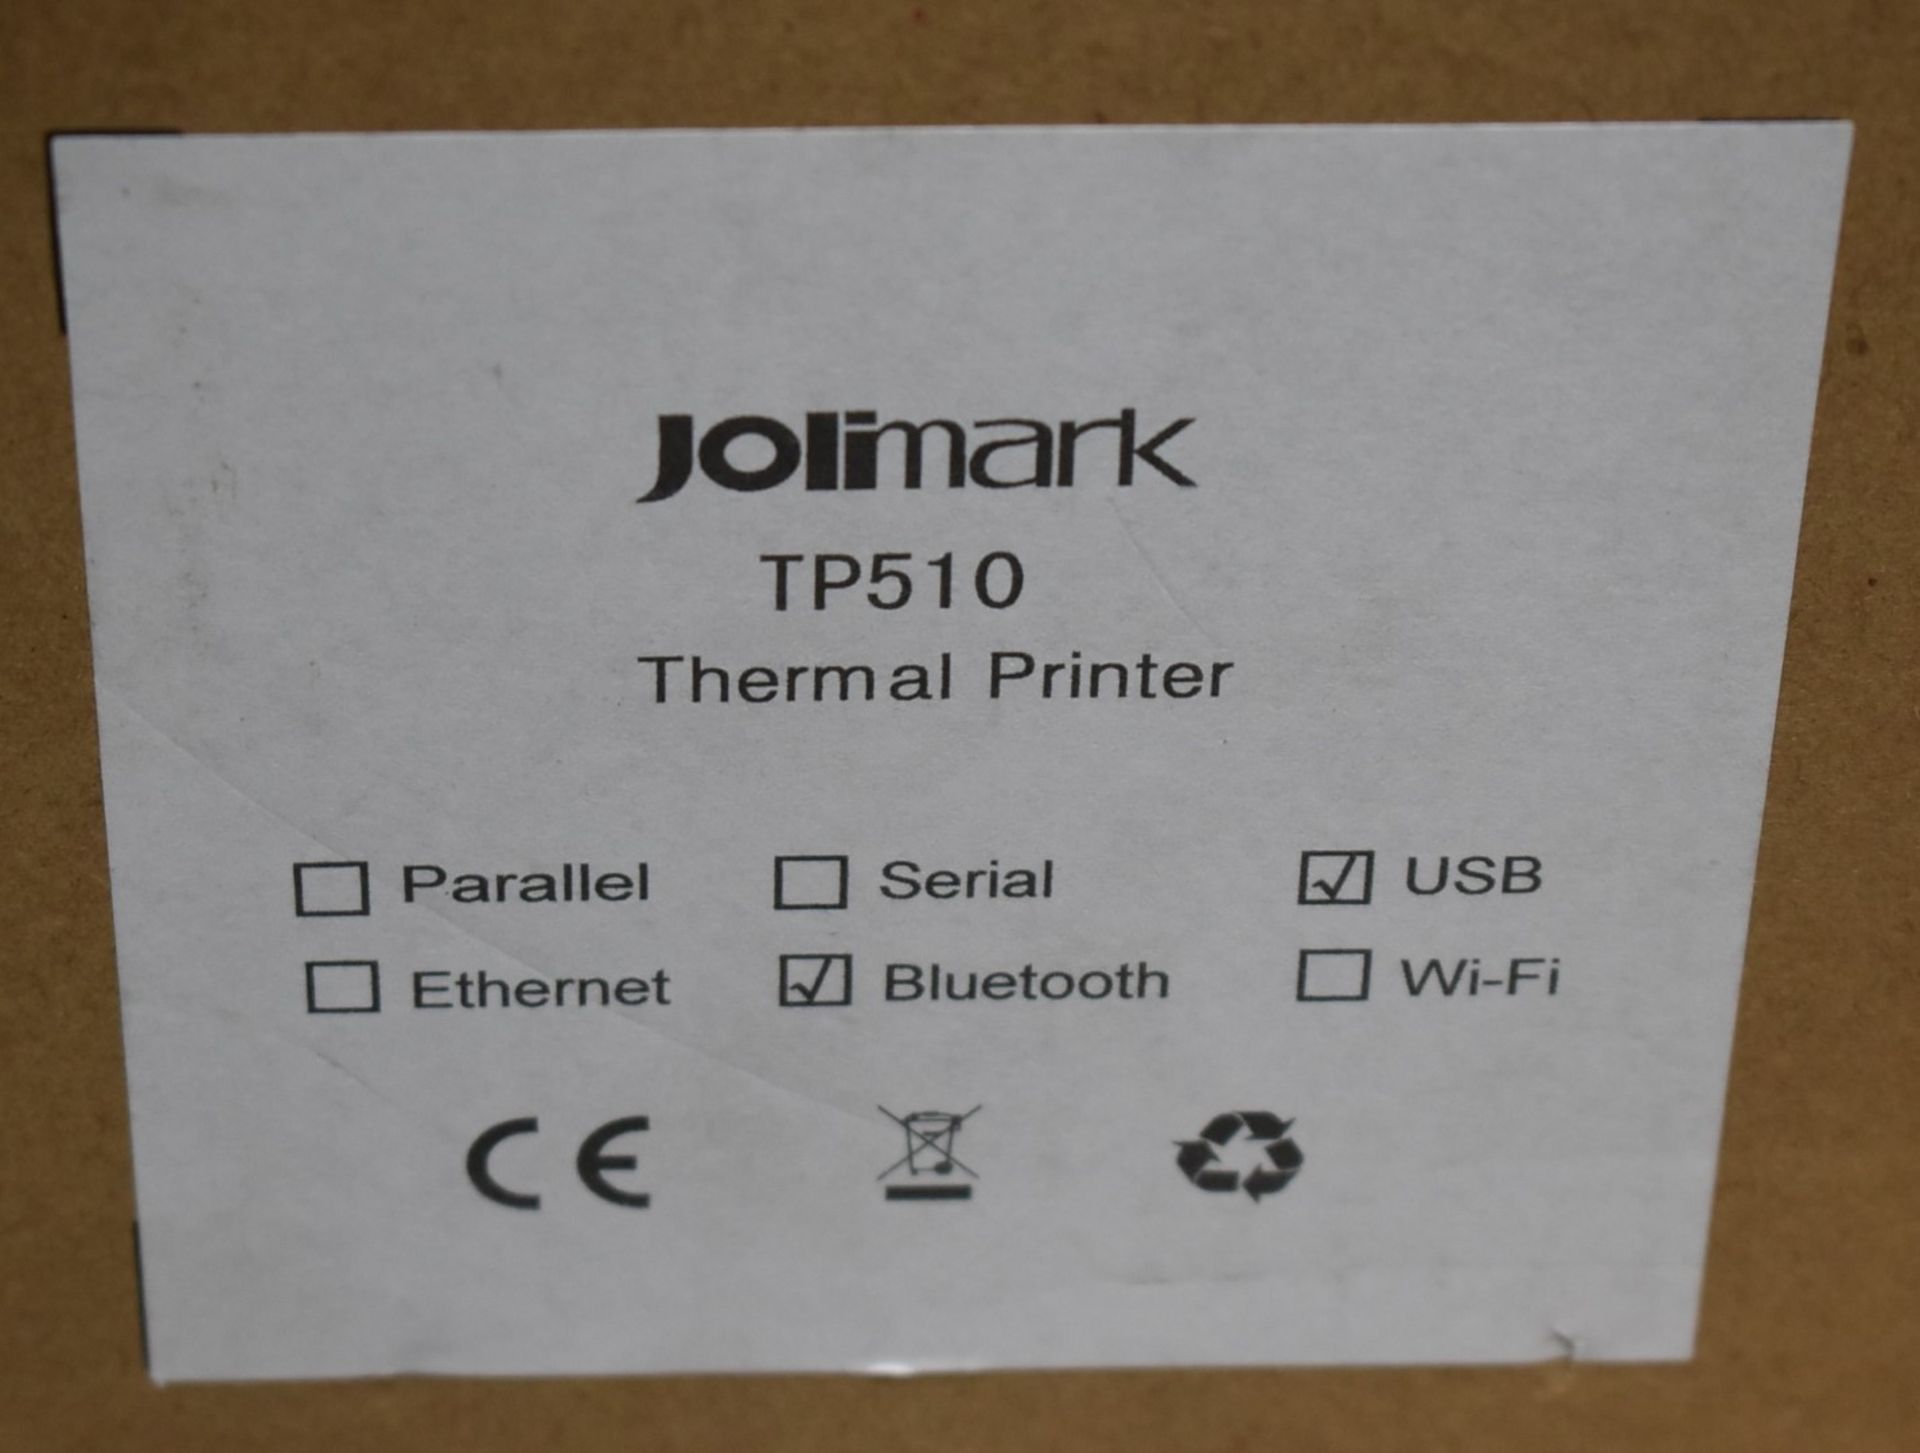 1 x Jolimark TP510 Bluetooth Receipt Printer - Brand New in Sealed Box - CL011 - Ref JA114 WH1 - - Image 3 of 3